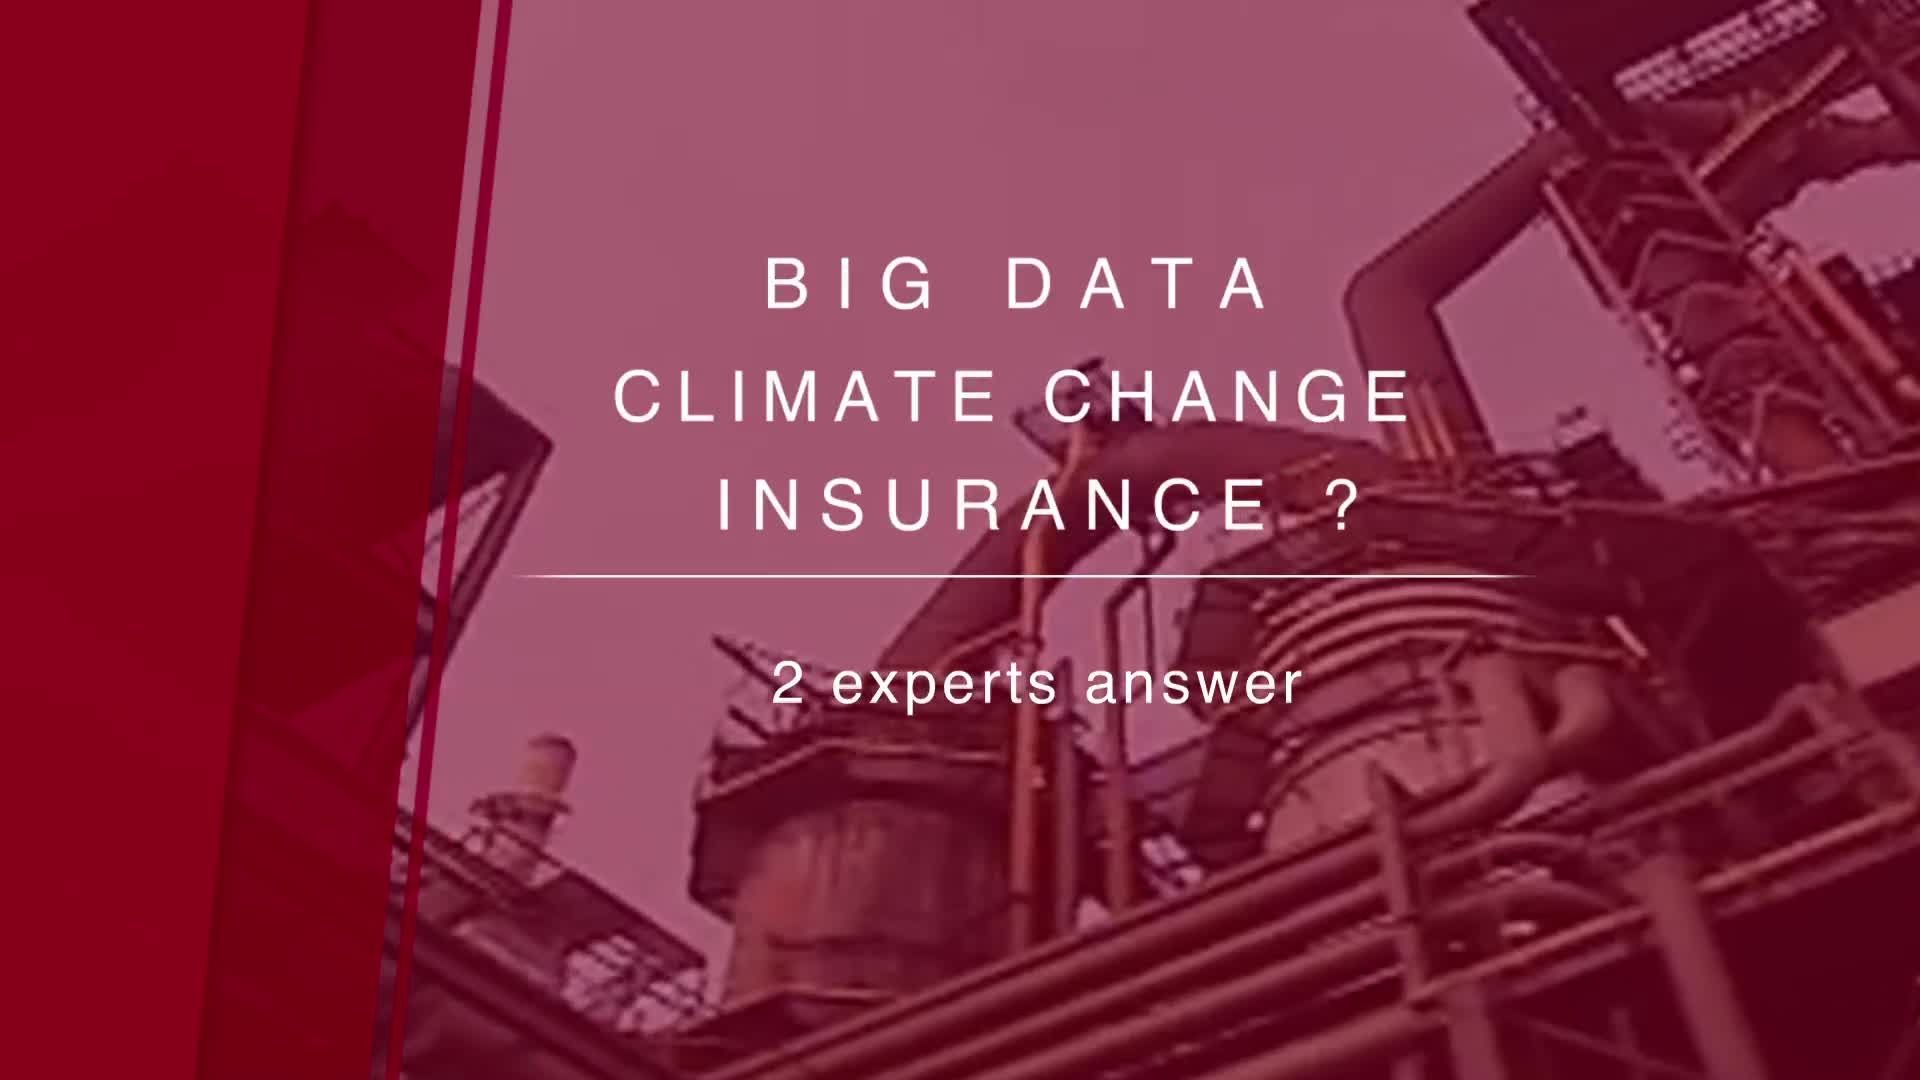 Big data, climate change and insurance - Big data, climate change and insurance